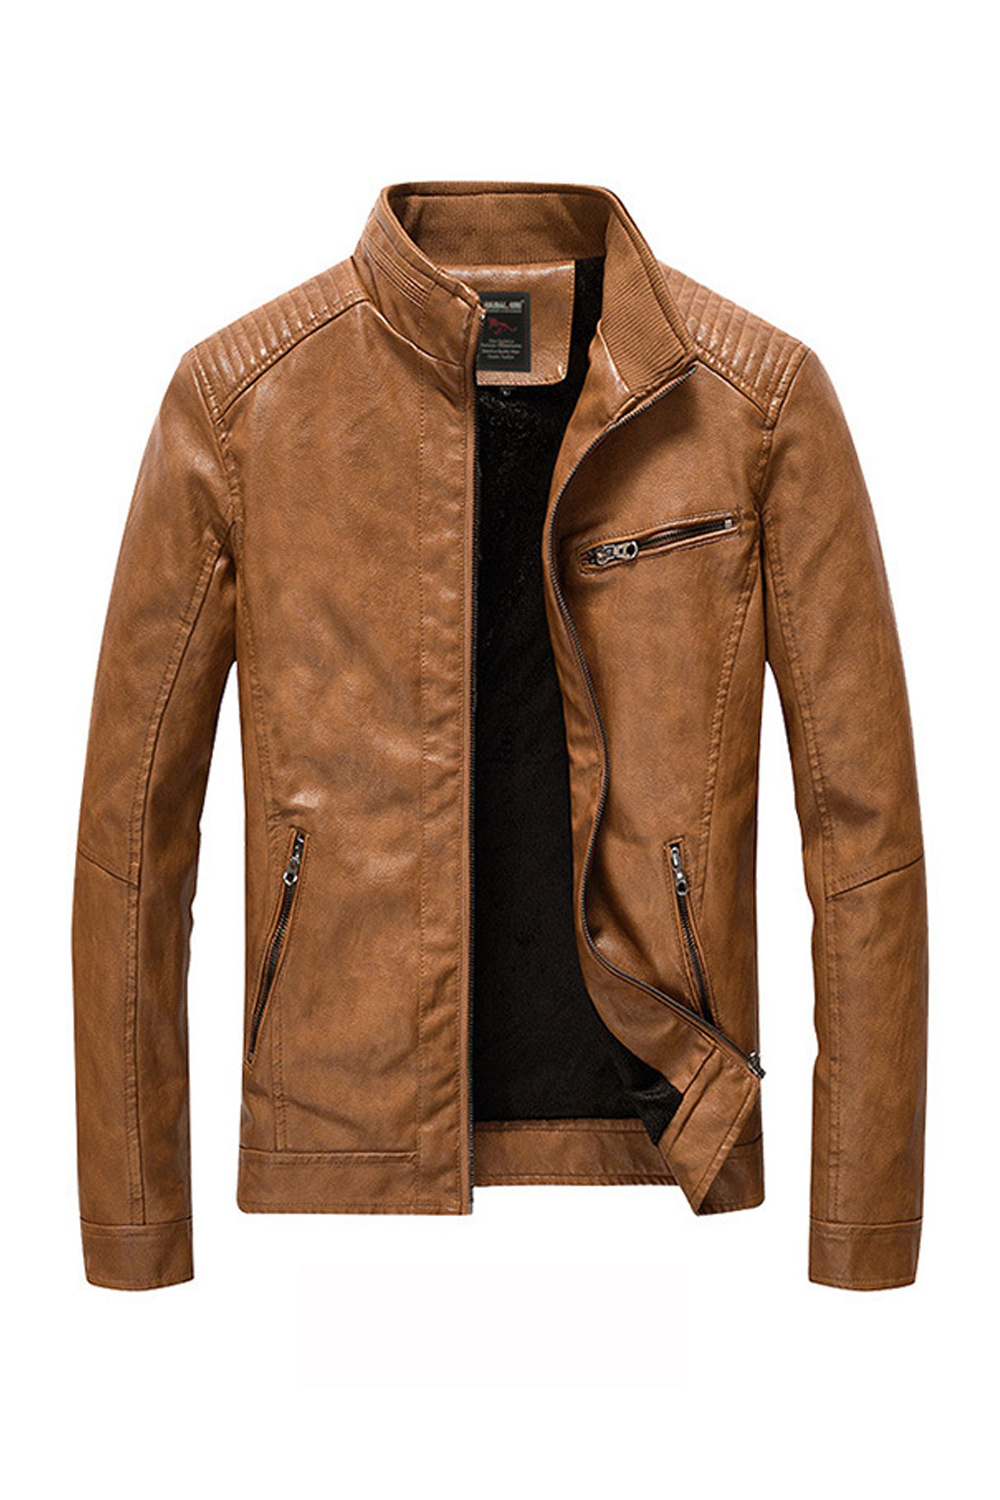 zara man leather jacket brown